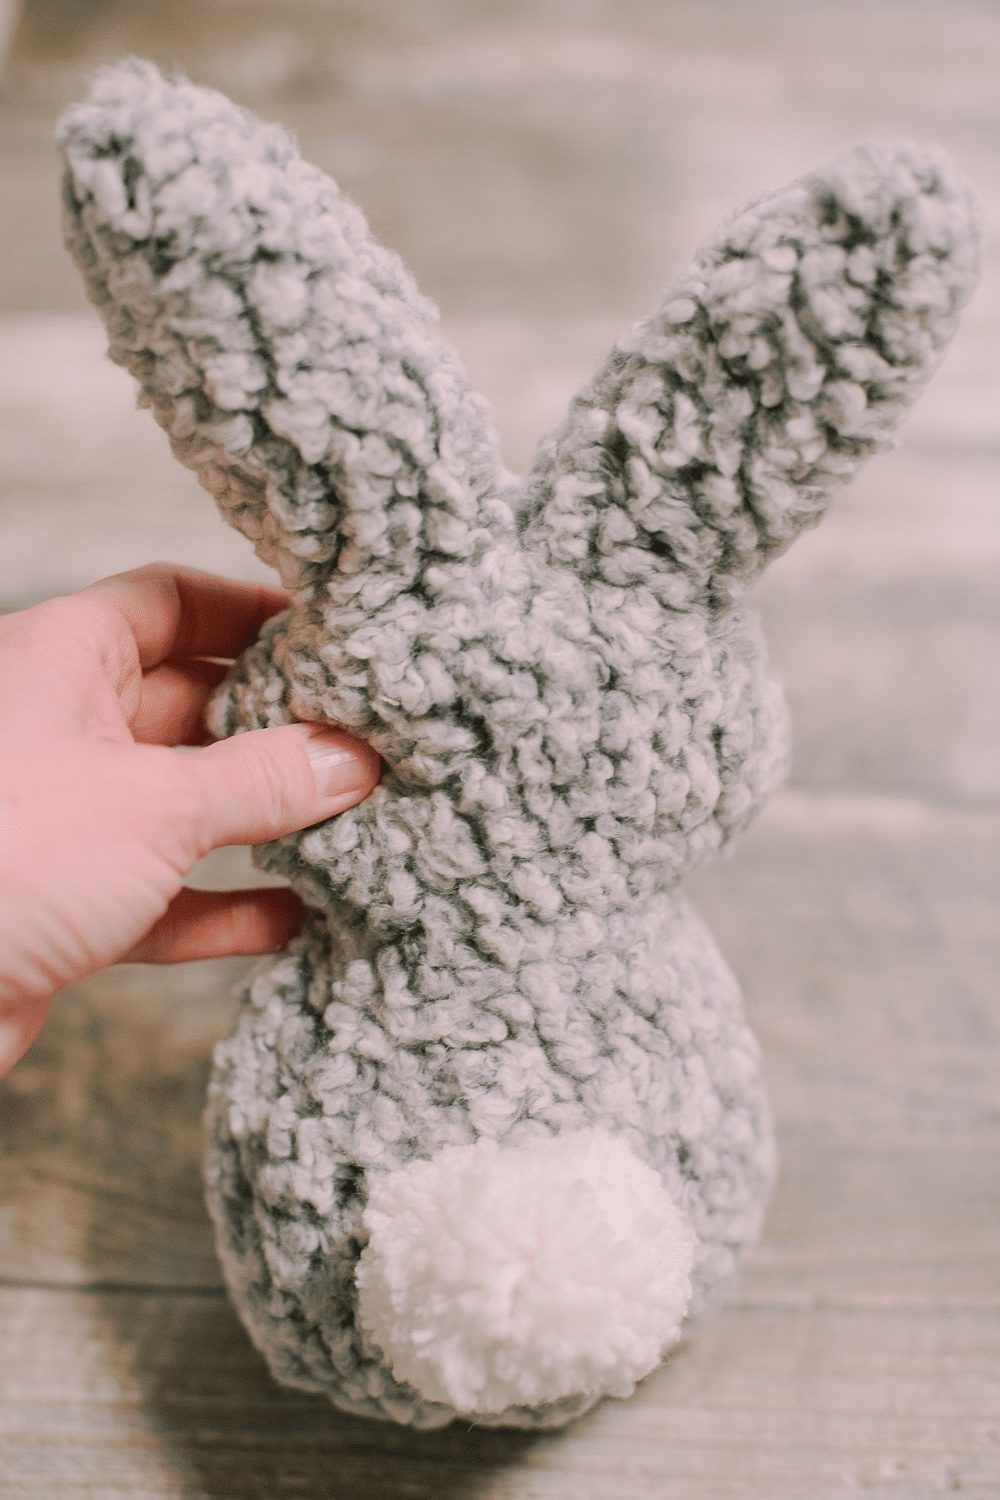 How to Make a DIY Stuffed Bunny